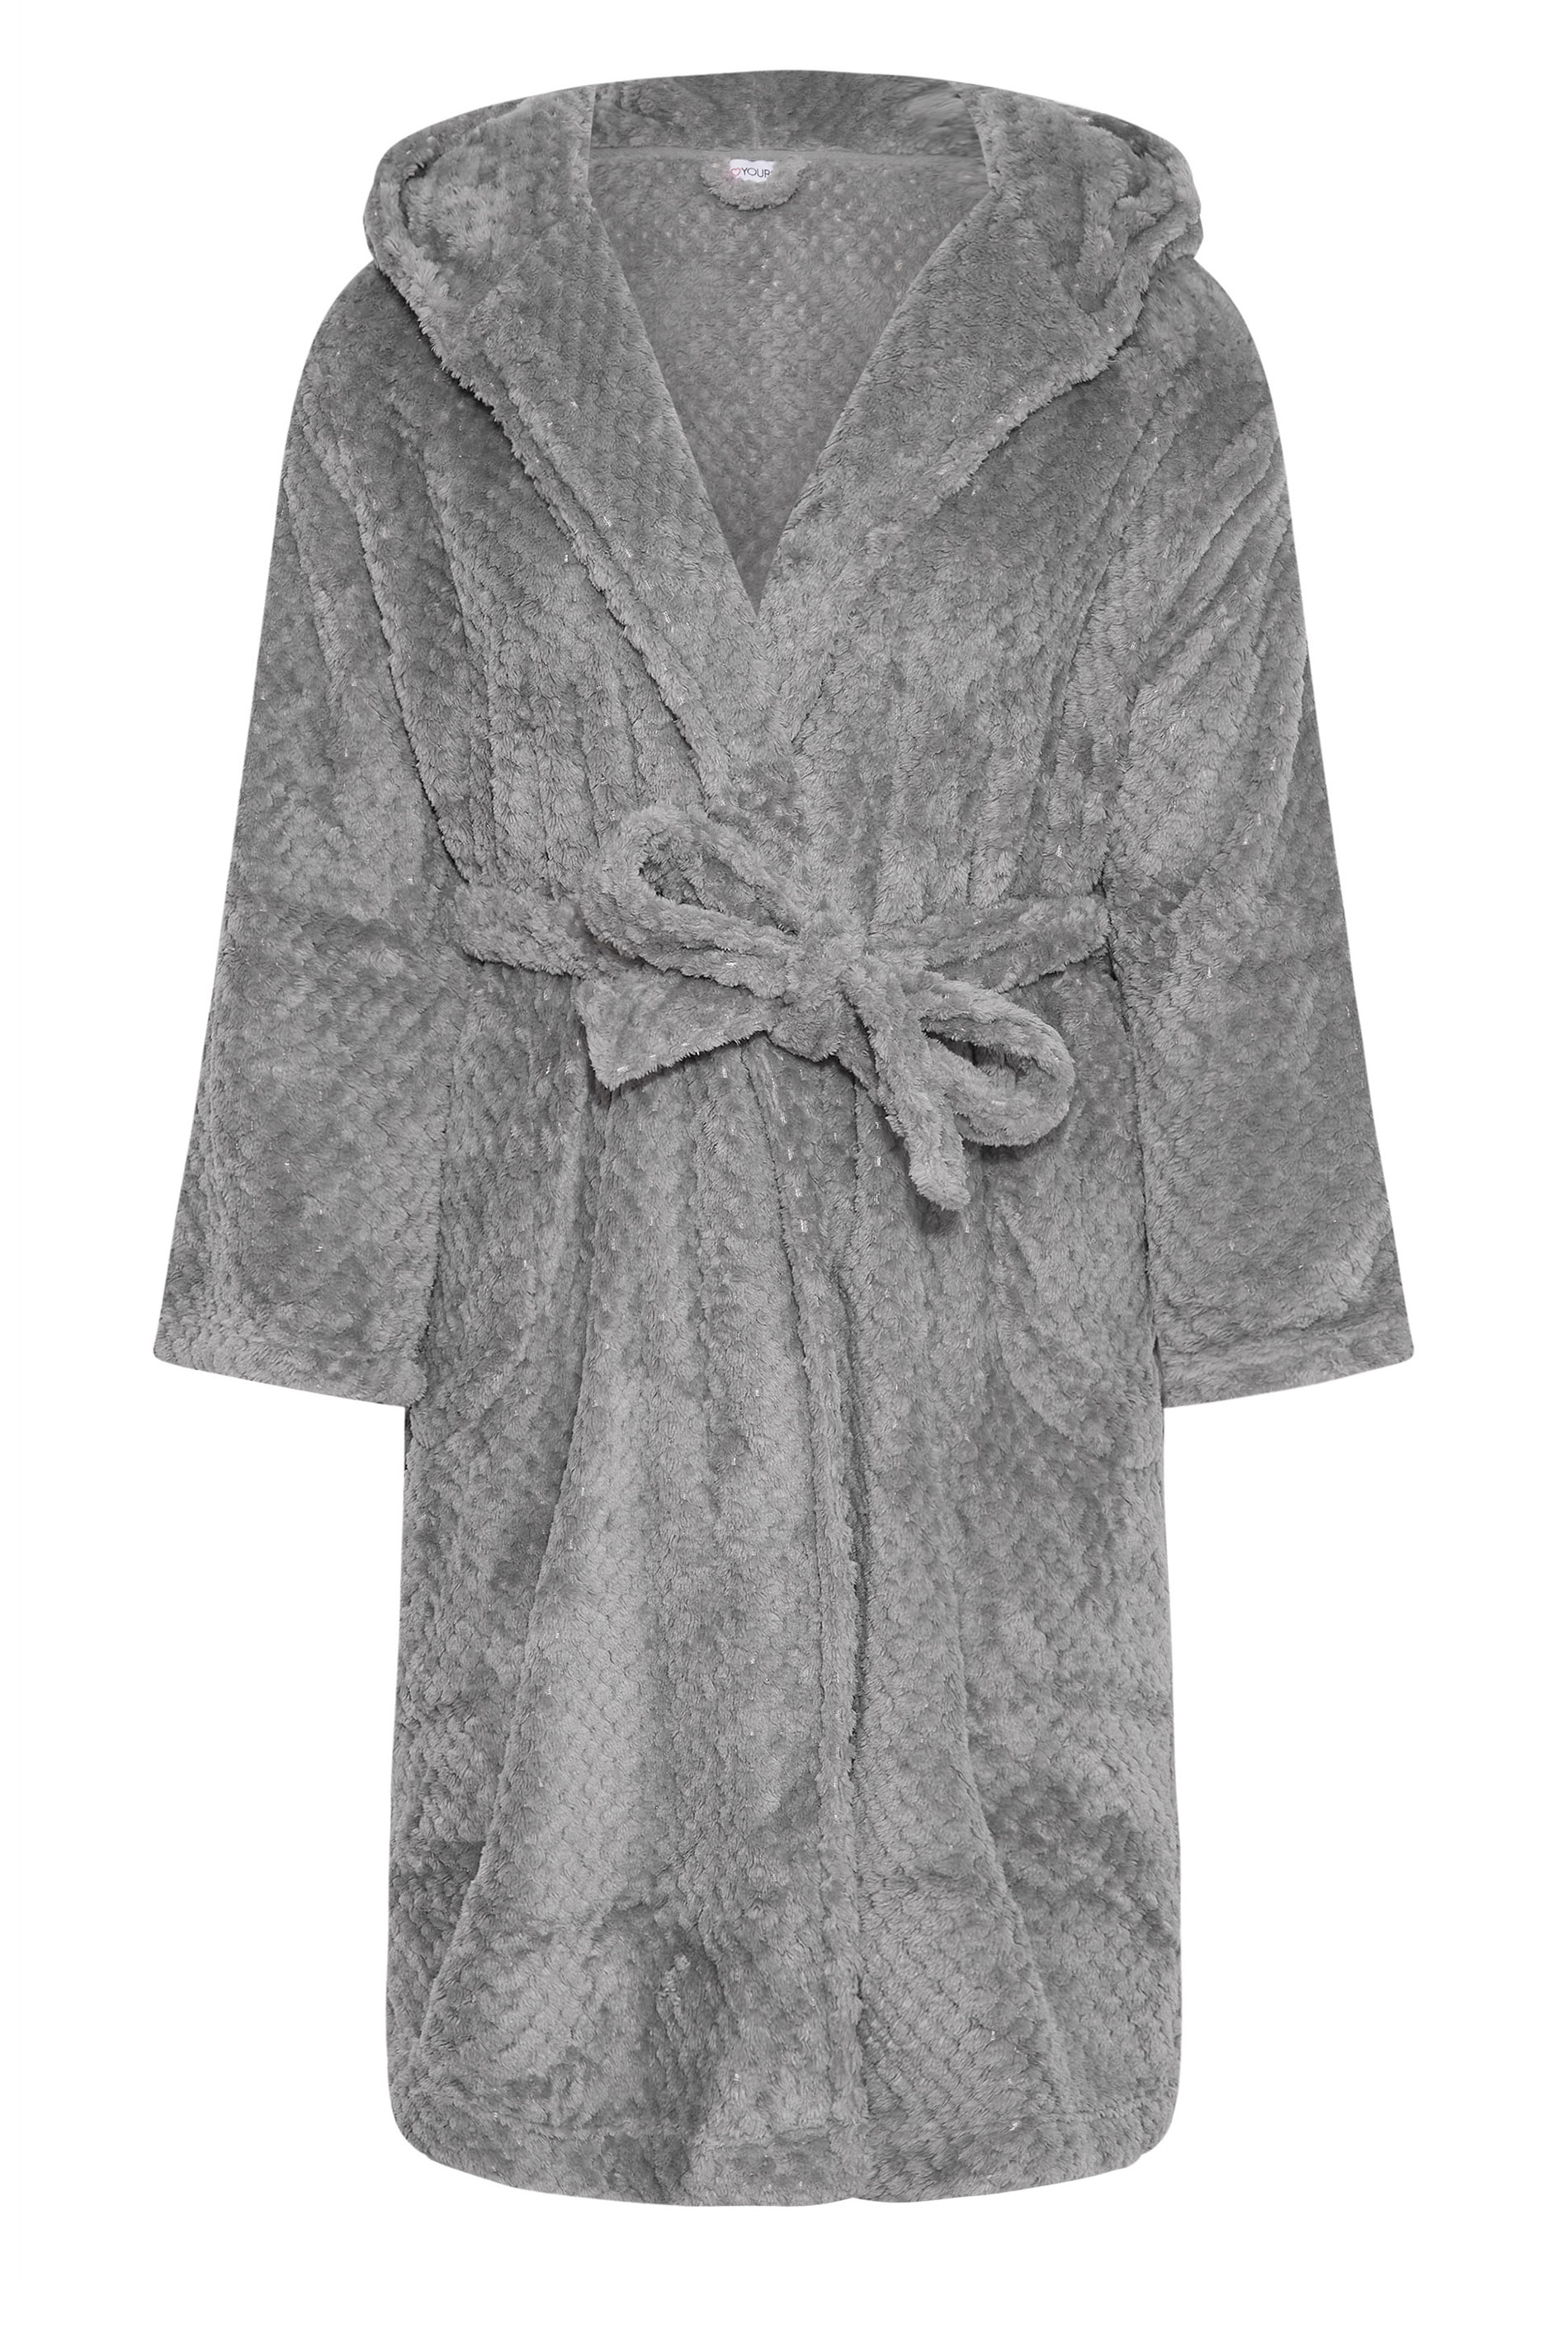 Grey Super Soft Fluffy Dressing Gown  PrettyLittleThing